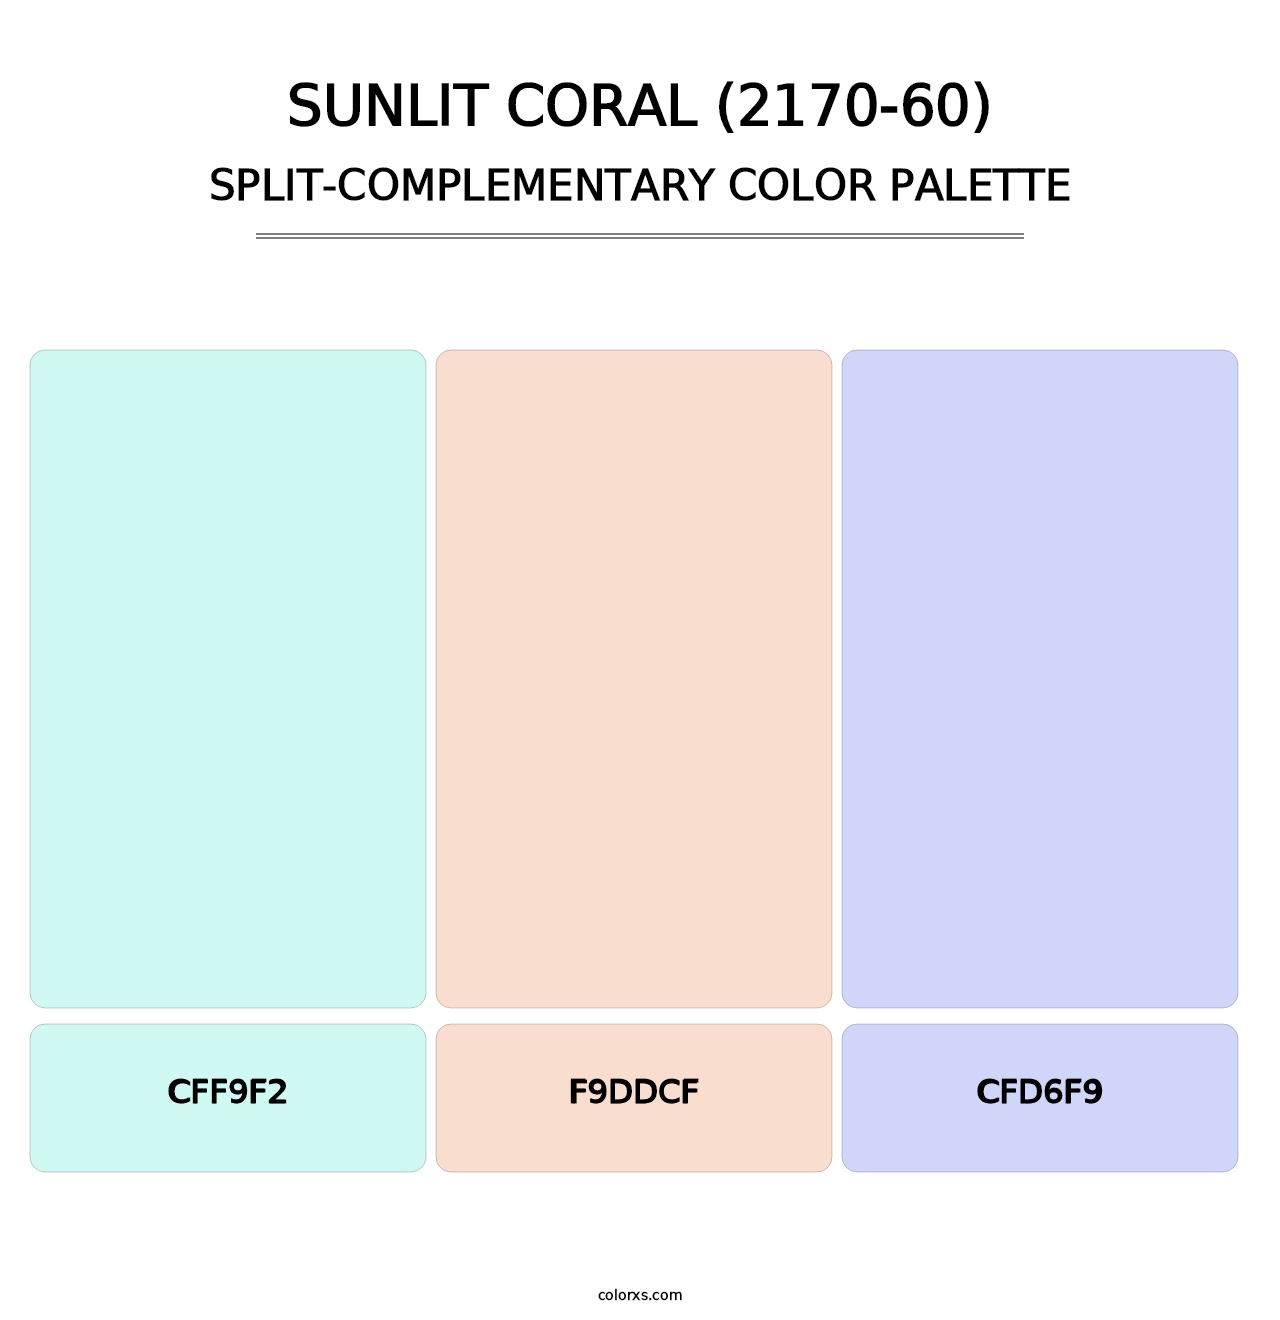 Sunlit Coral (2170-60) - Split-Complementary Color Palette